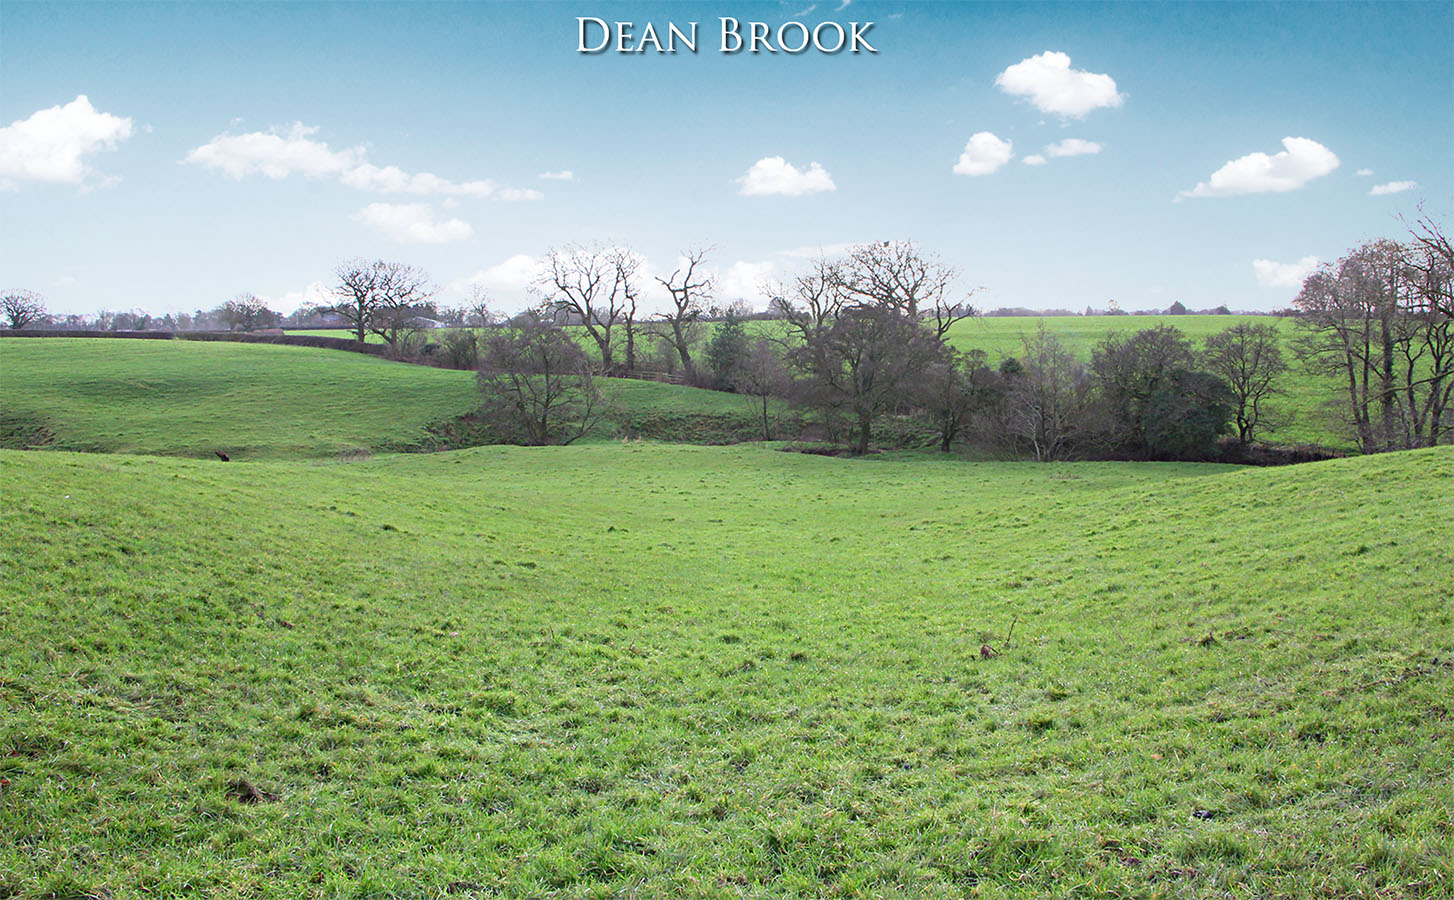 dean brook